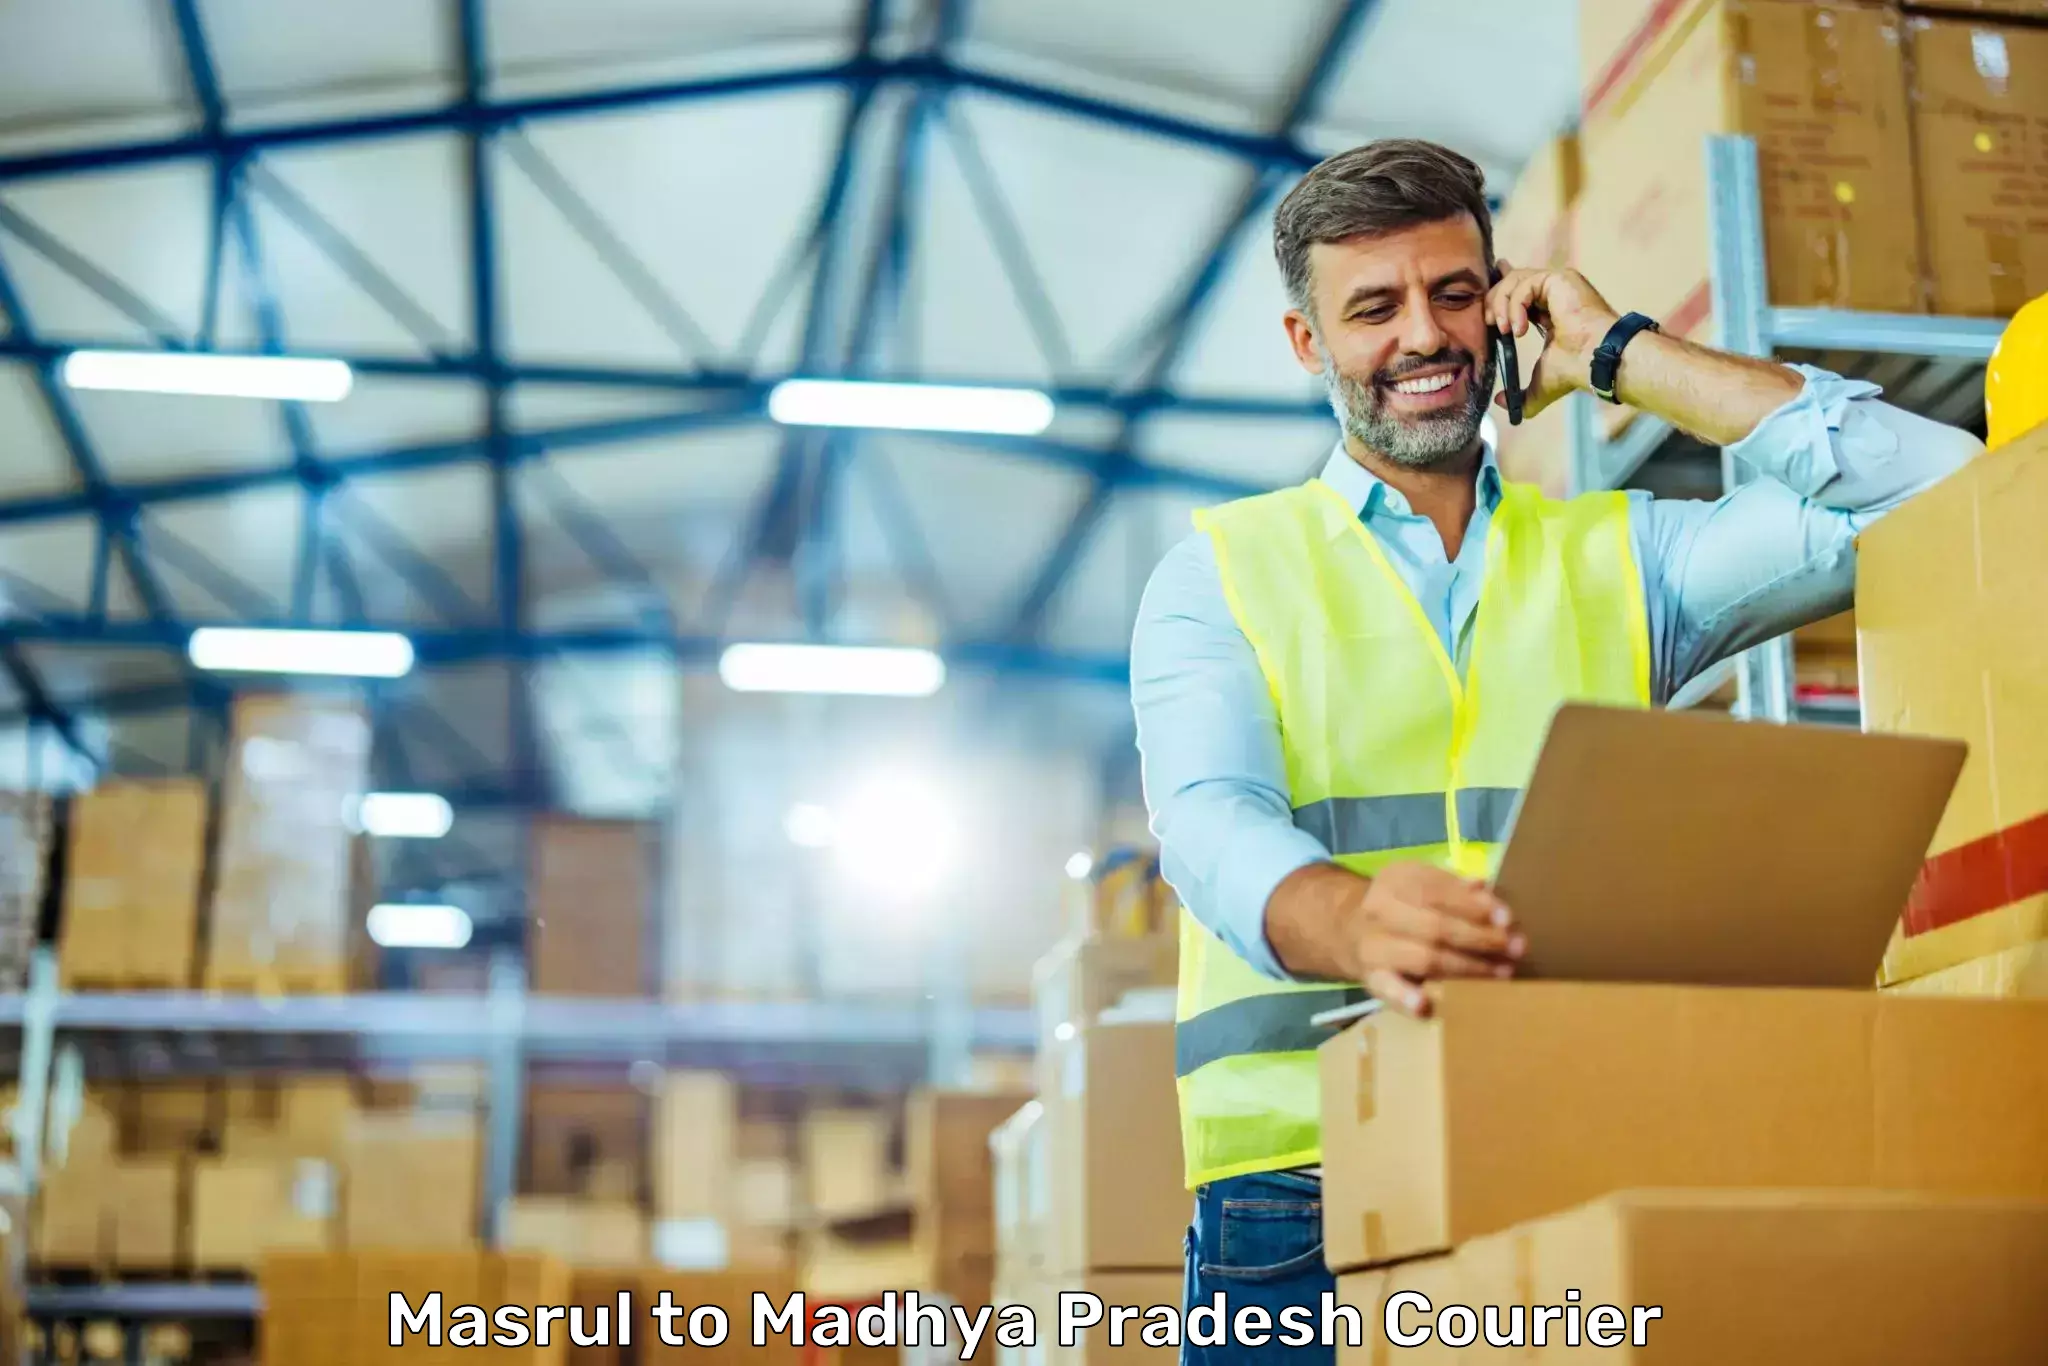 Courier service efficiency Masrul to Madhya Pradesh